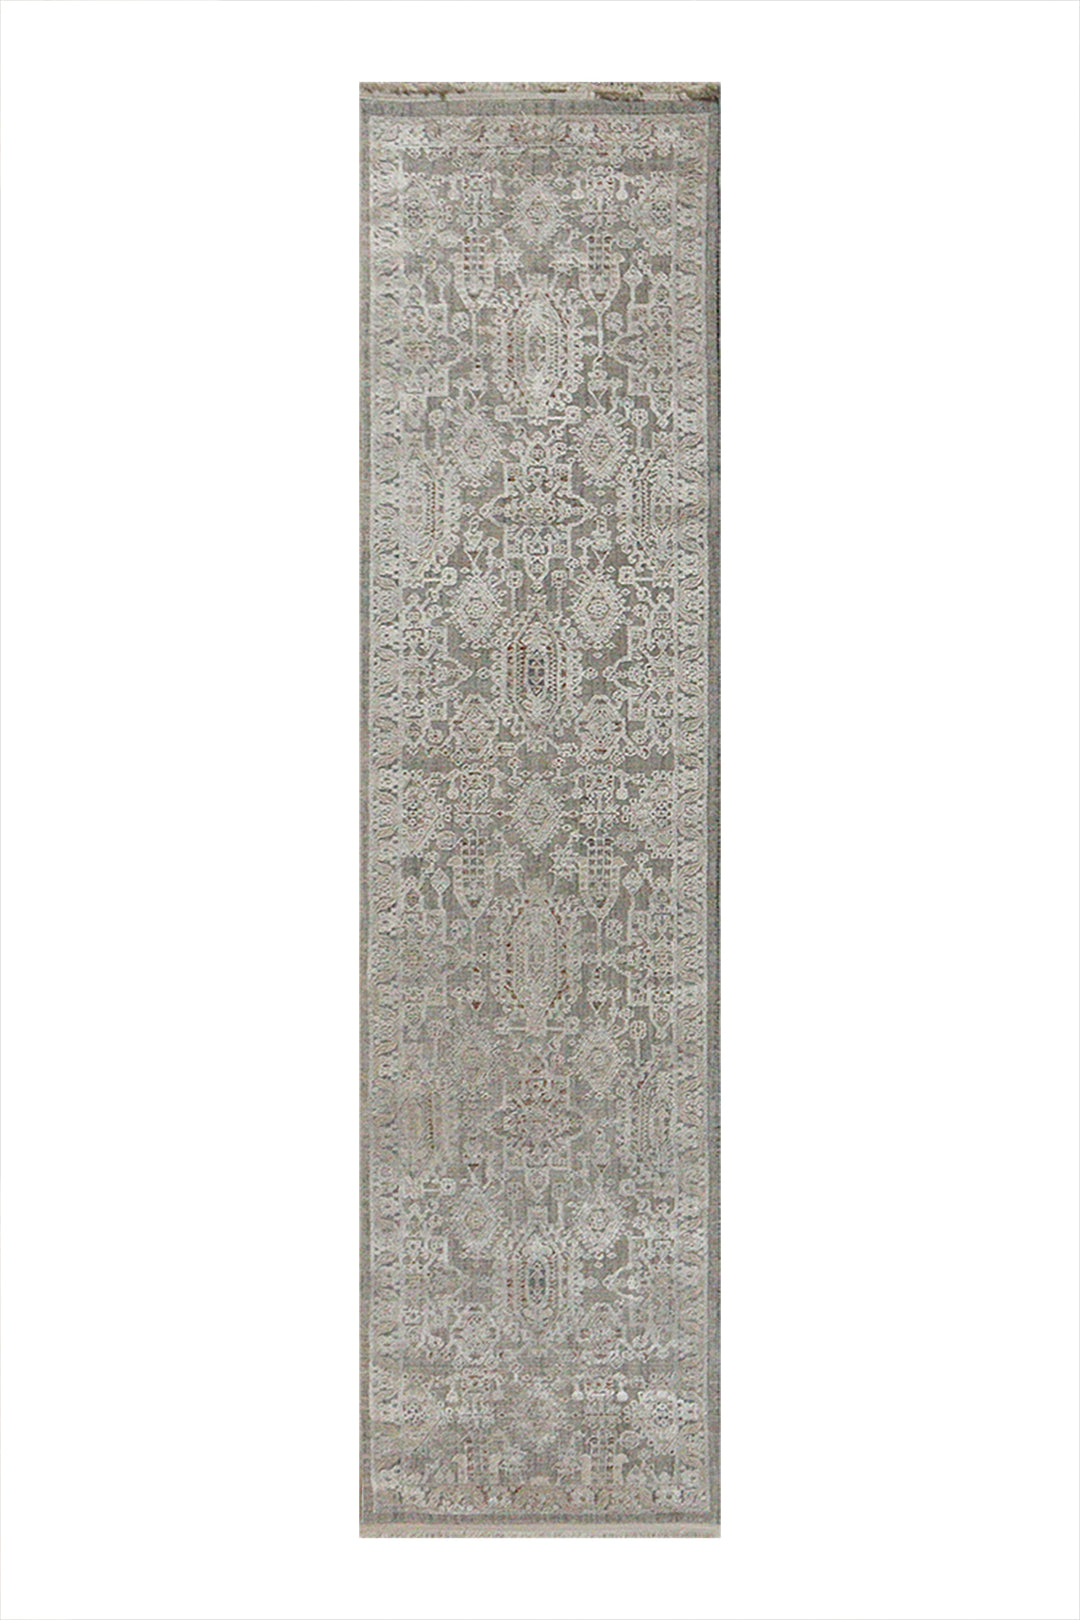 Turkish Modern Festival-1 Rug - Gray - 1.9 X 8.0 Ft- Sleek And Minimalist For Chic Interiors